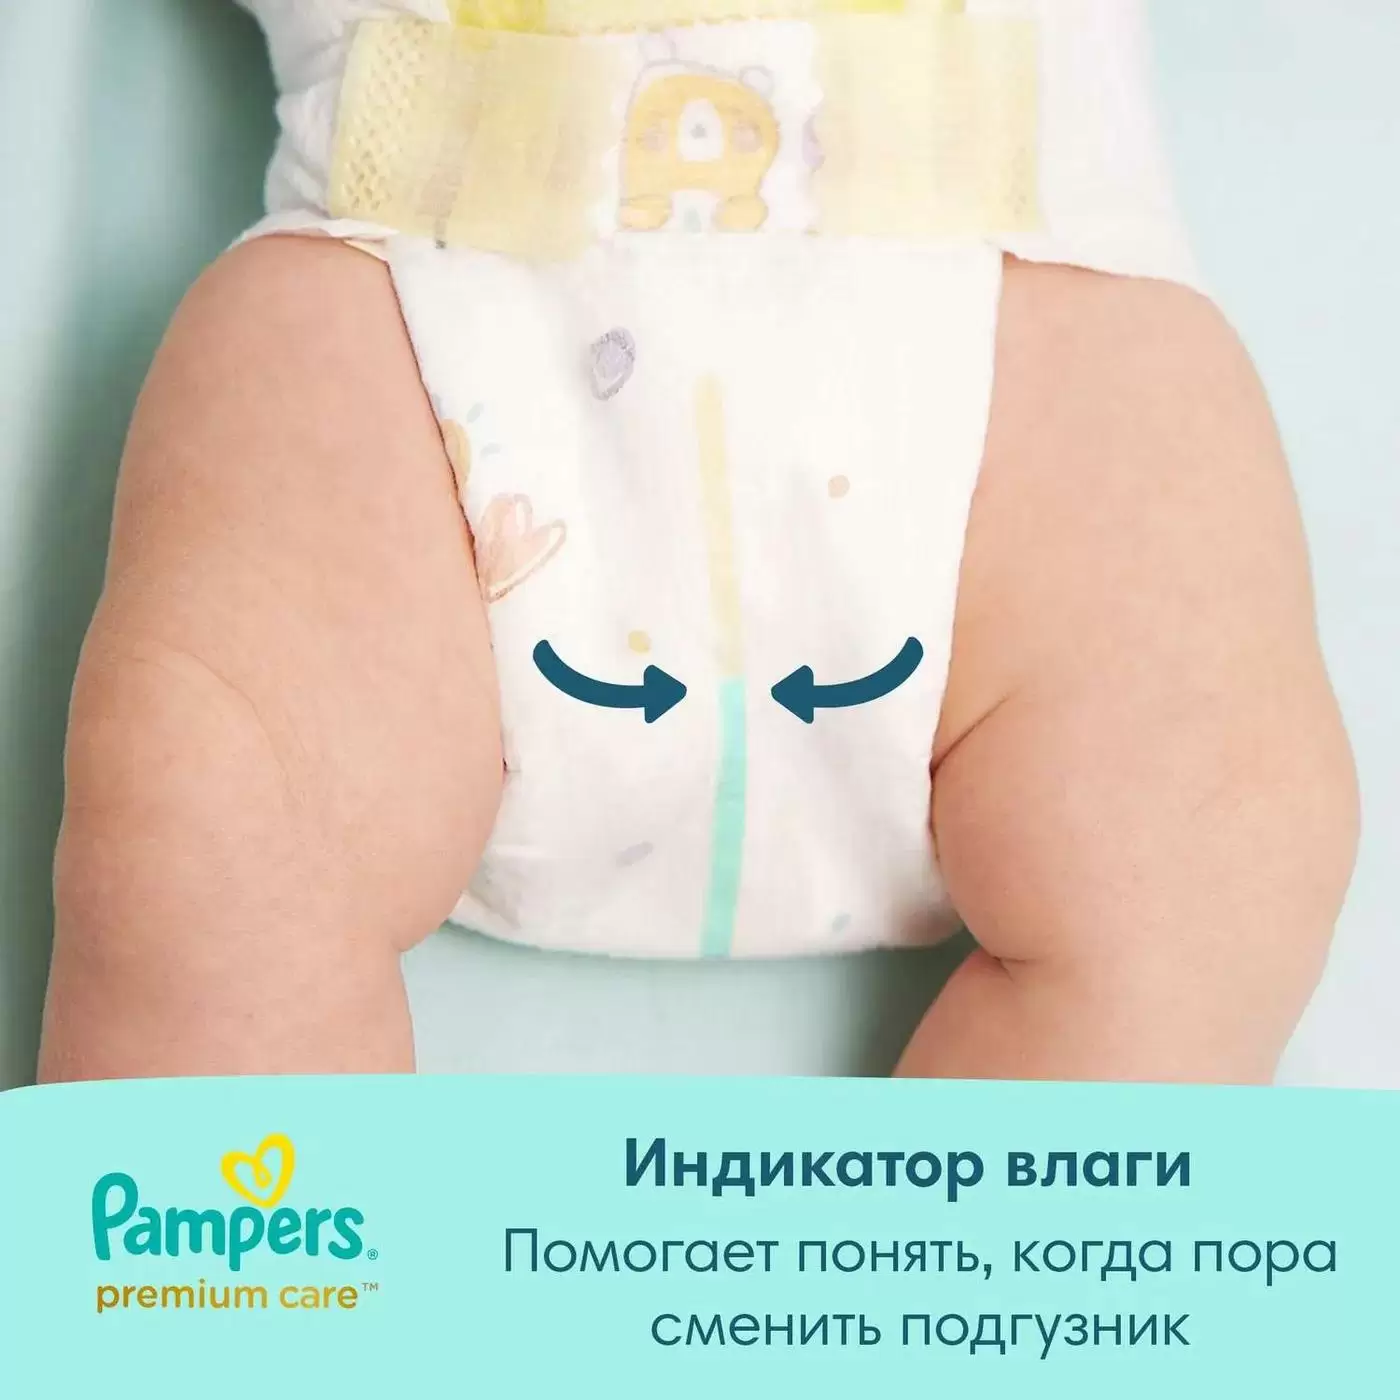 Подгузники PAMPERS Premium Care Newborn (2-5кг) 20шт